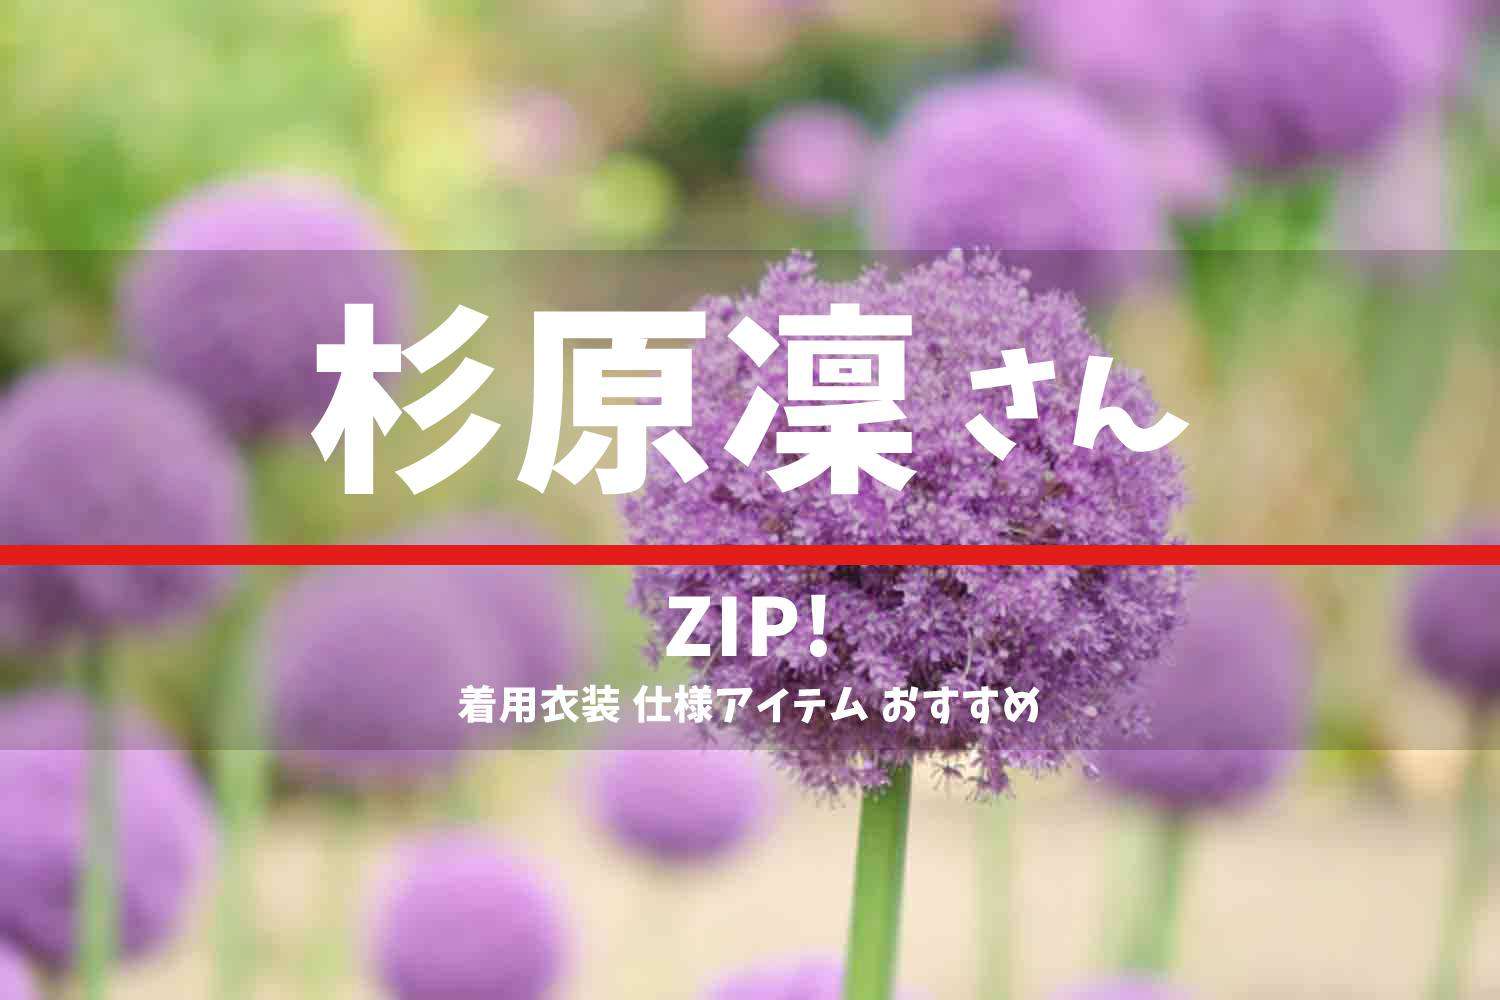 ZIP! 杉原凜さん 番組 衣装 2022年6月20日放送